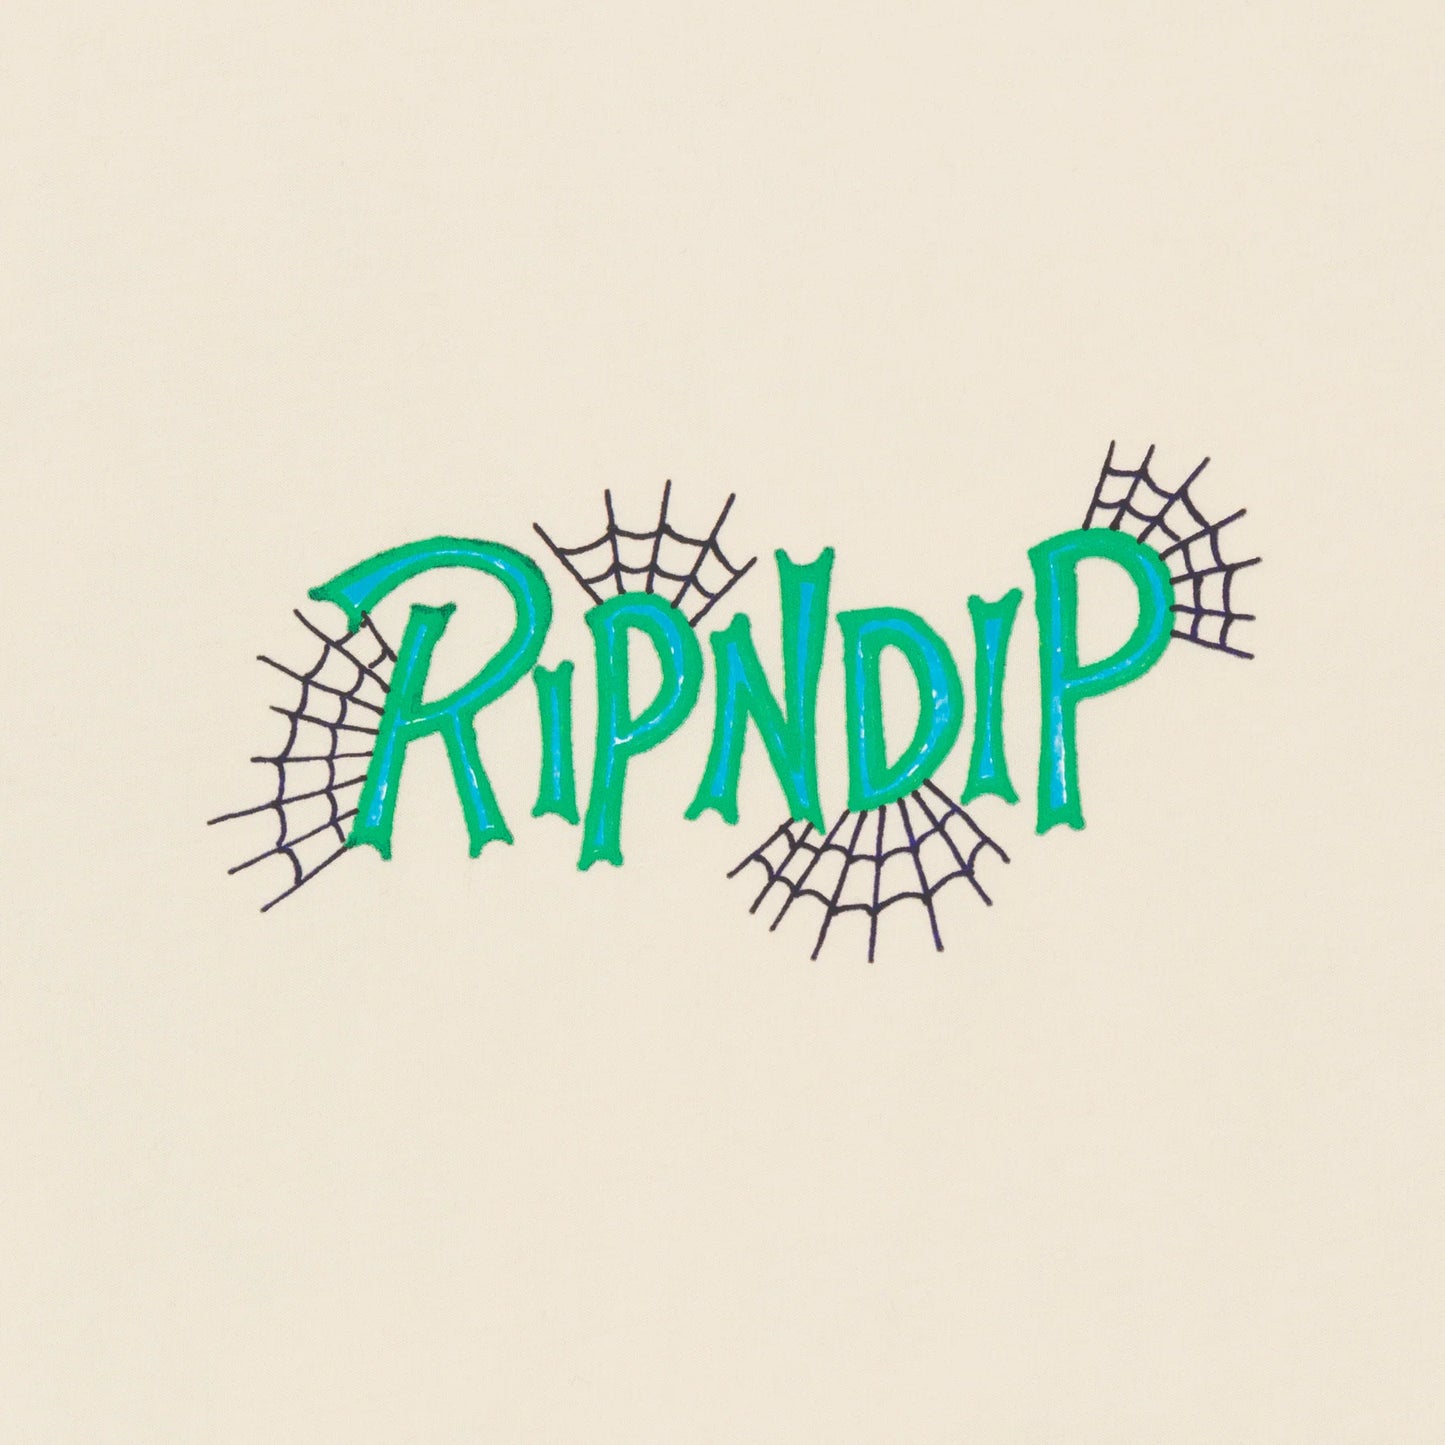 RIPNDIP Travis Graphic T-shirt